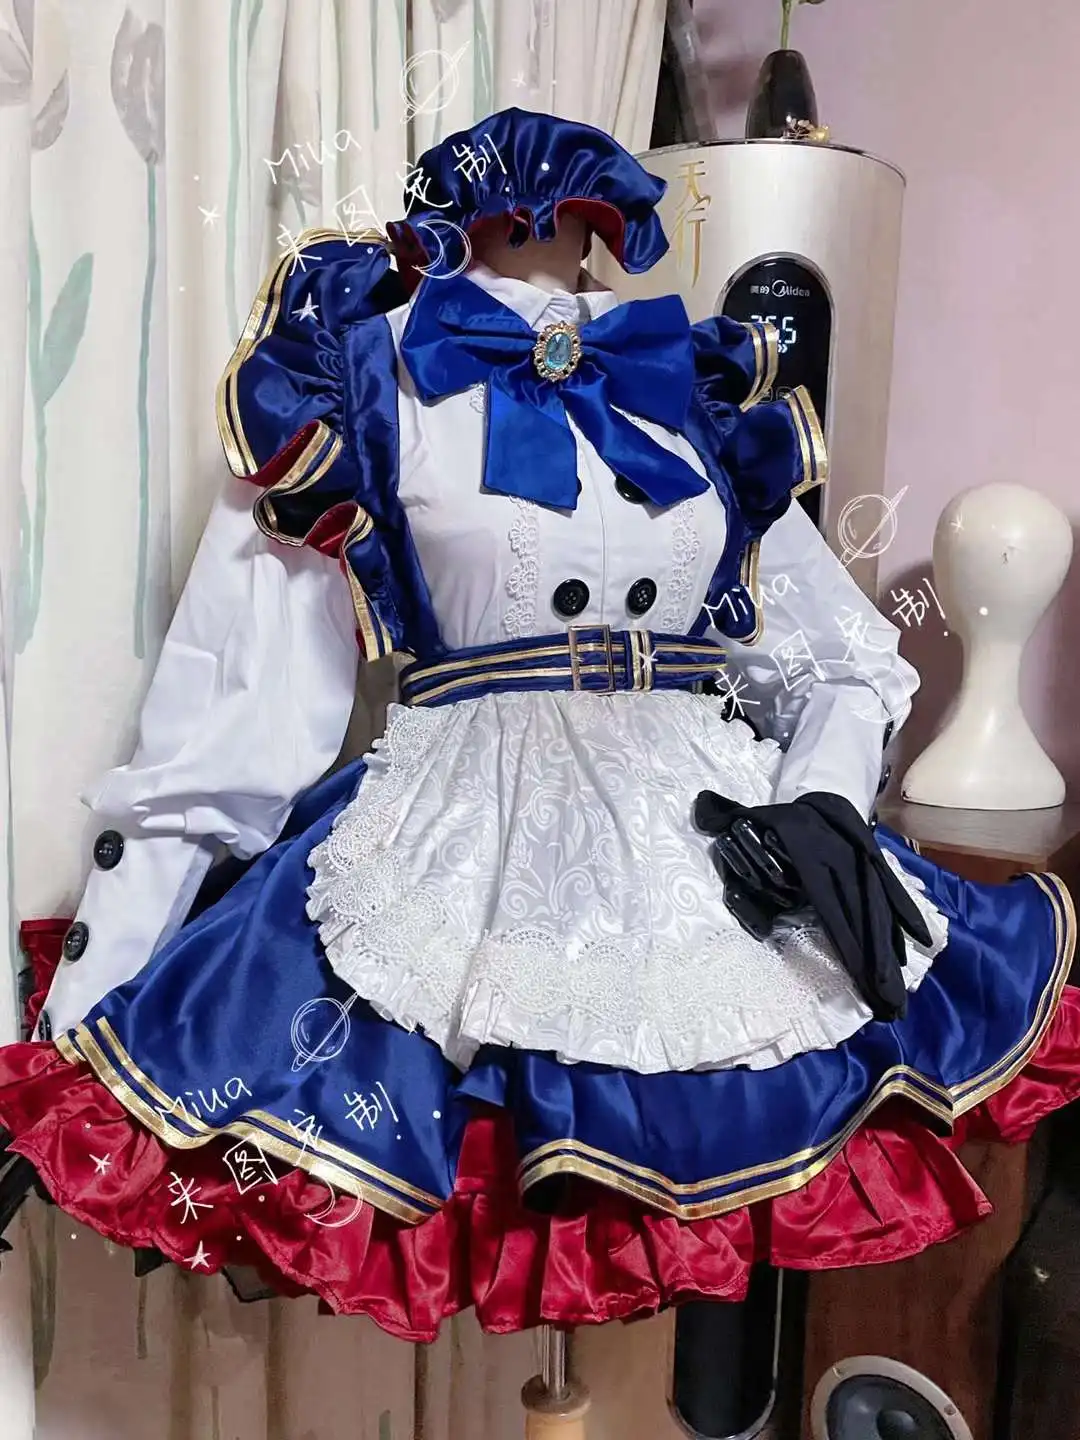 

Fate/Grand Order FGO Yuhuan Yang Guifei косплей костюм ролевая игра Хэллоуин Карнавальная вечеринка наряд для женщин Новинка